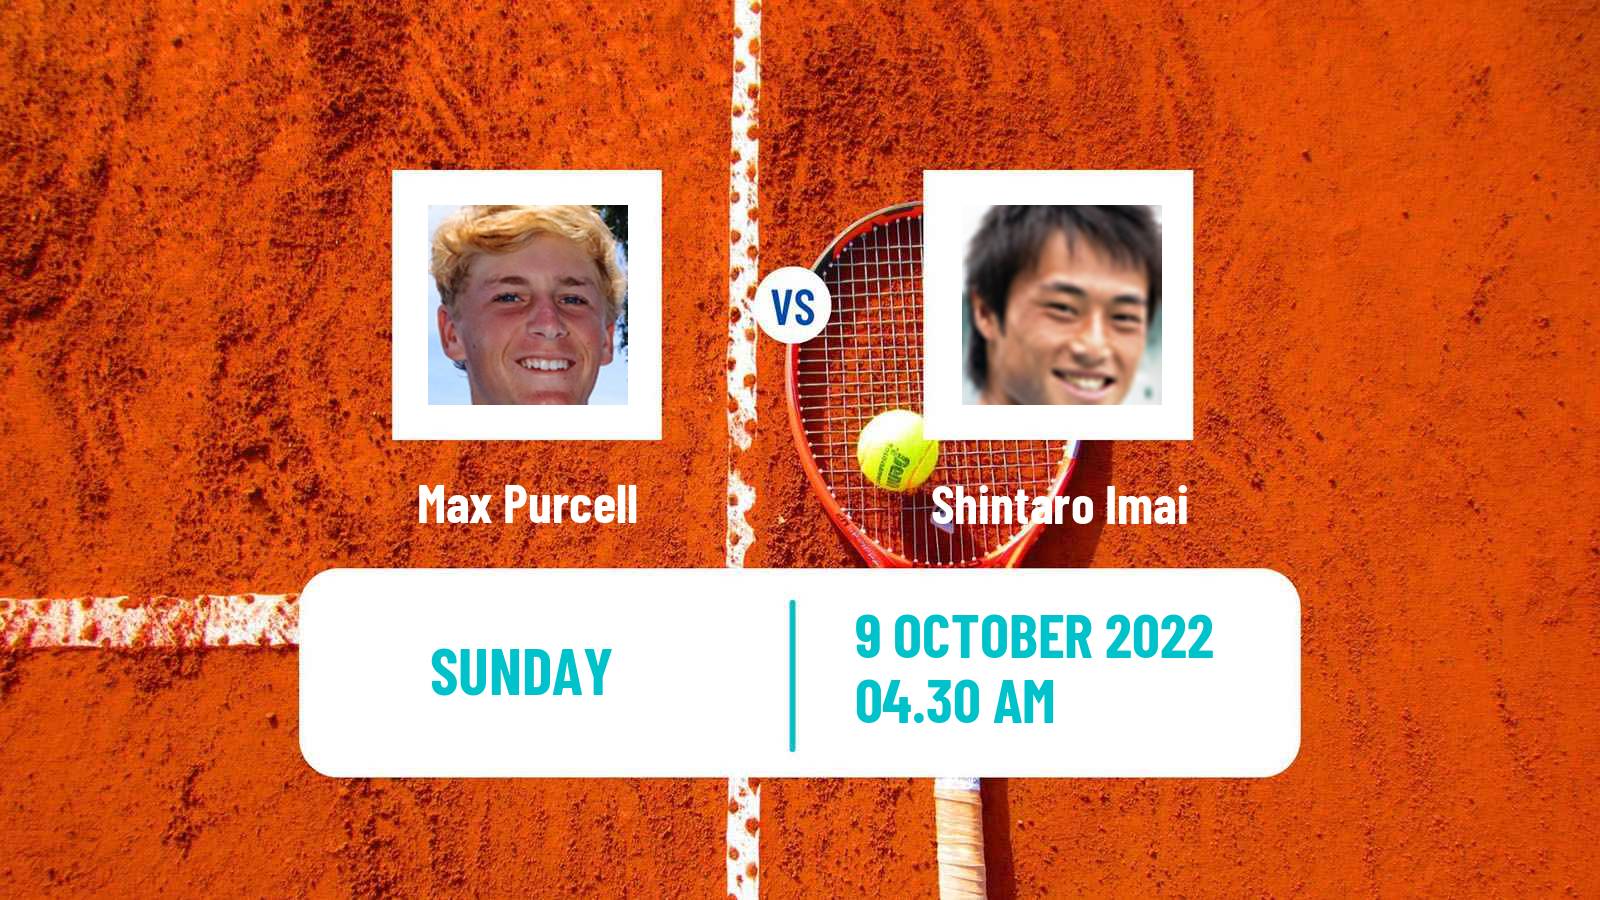 Tennis ATP Challenger Max Purcell - Shintaro Imai